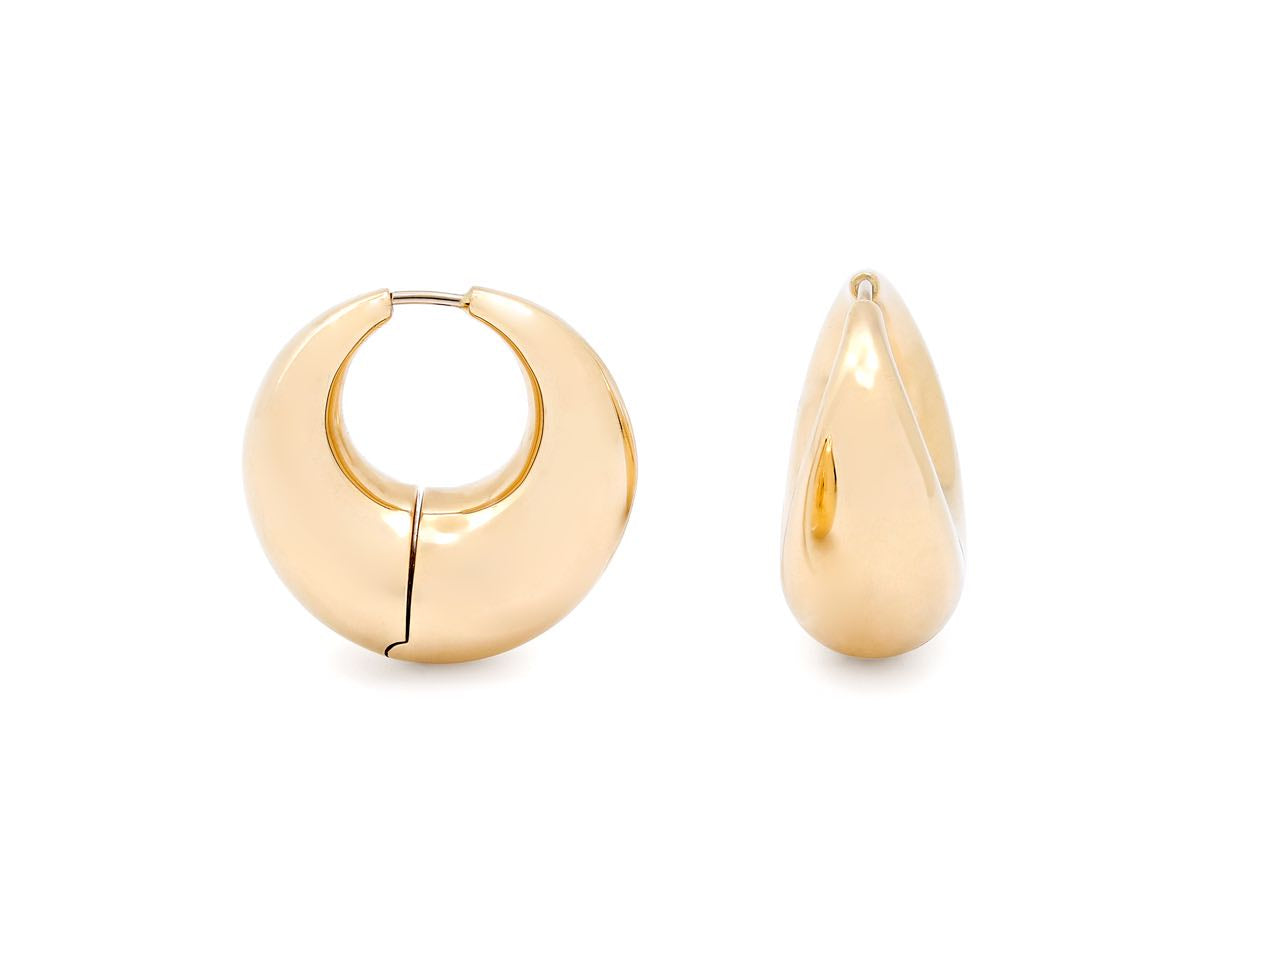 Crescent Hoop Earrings in 18K Gold, Medium, by Beladora